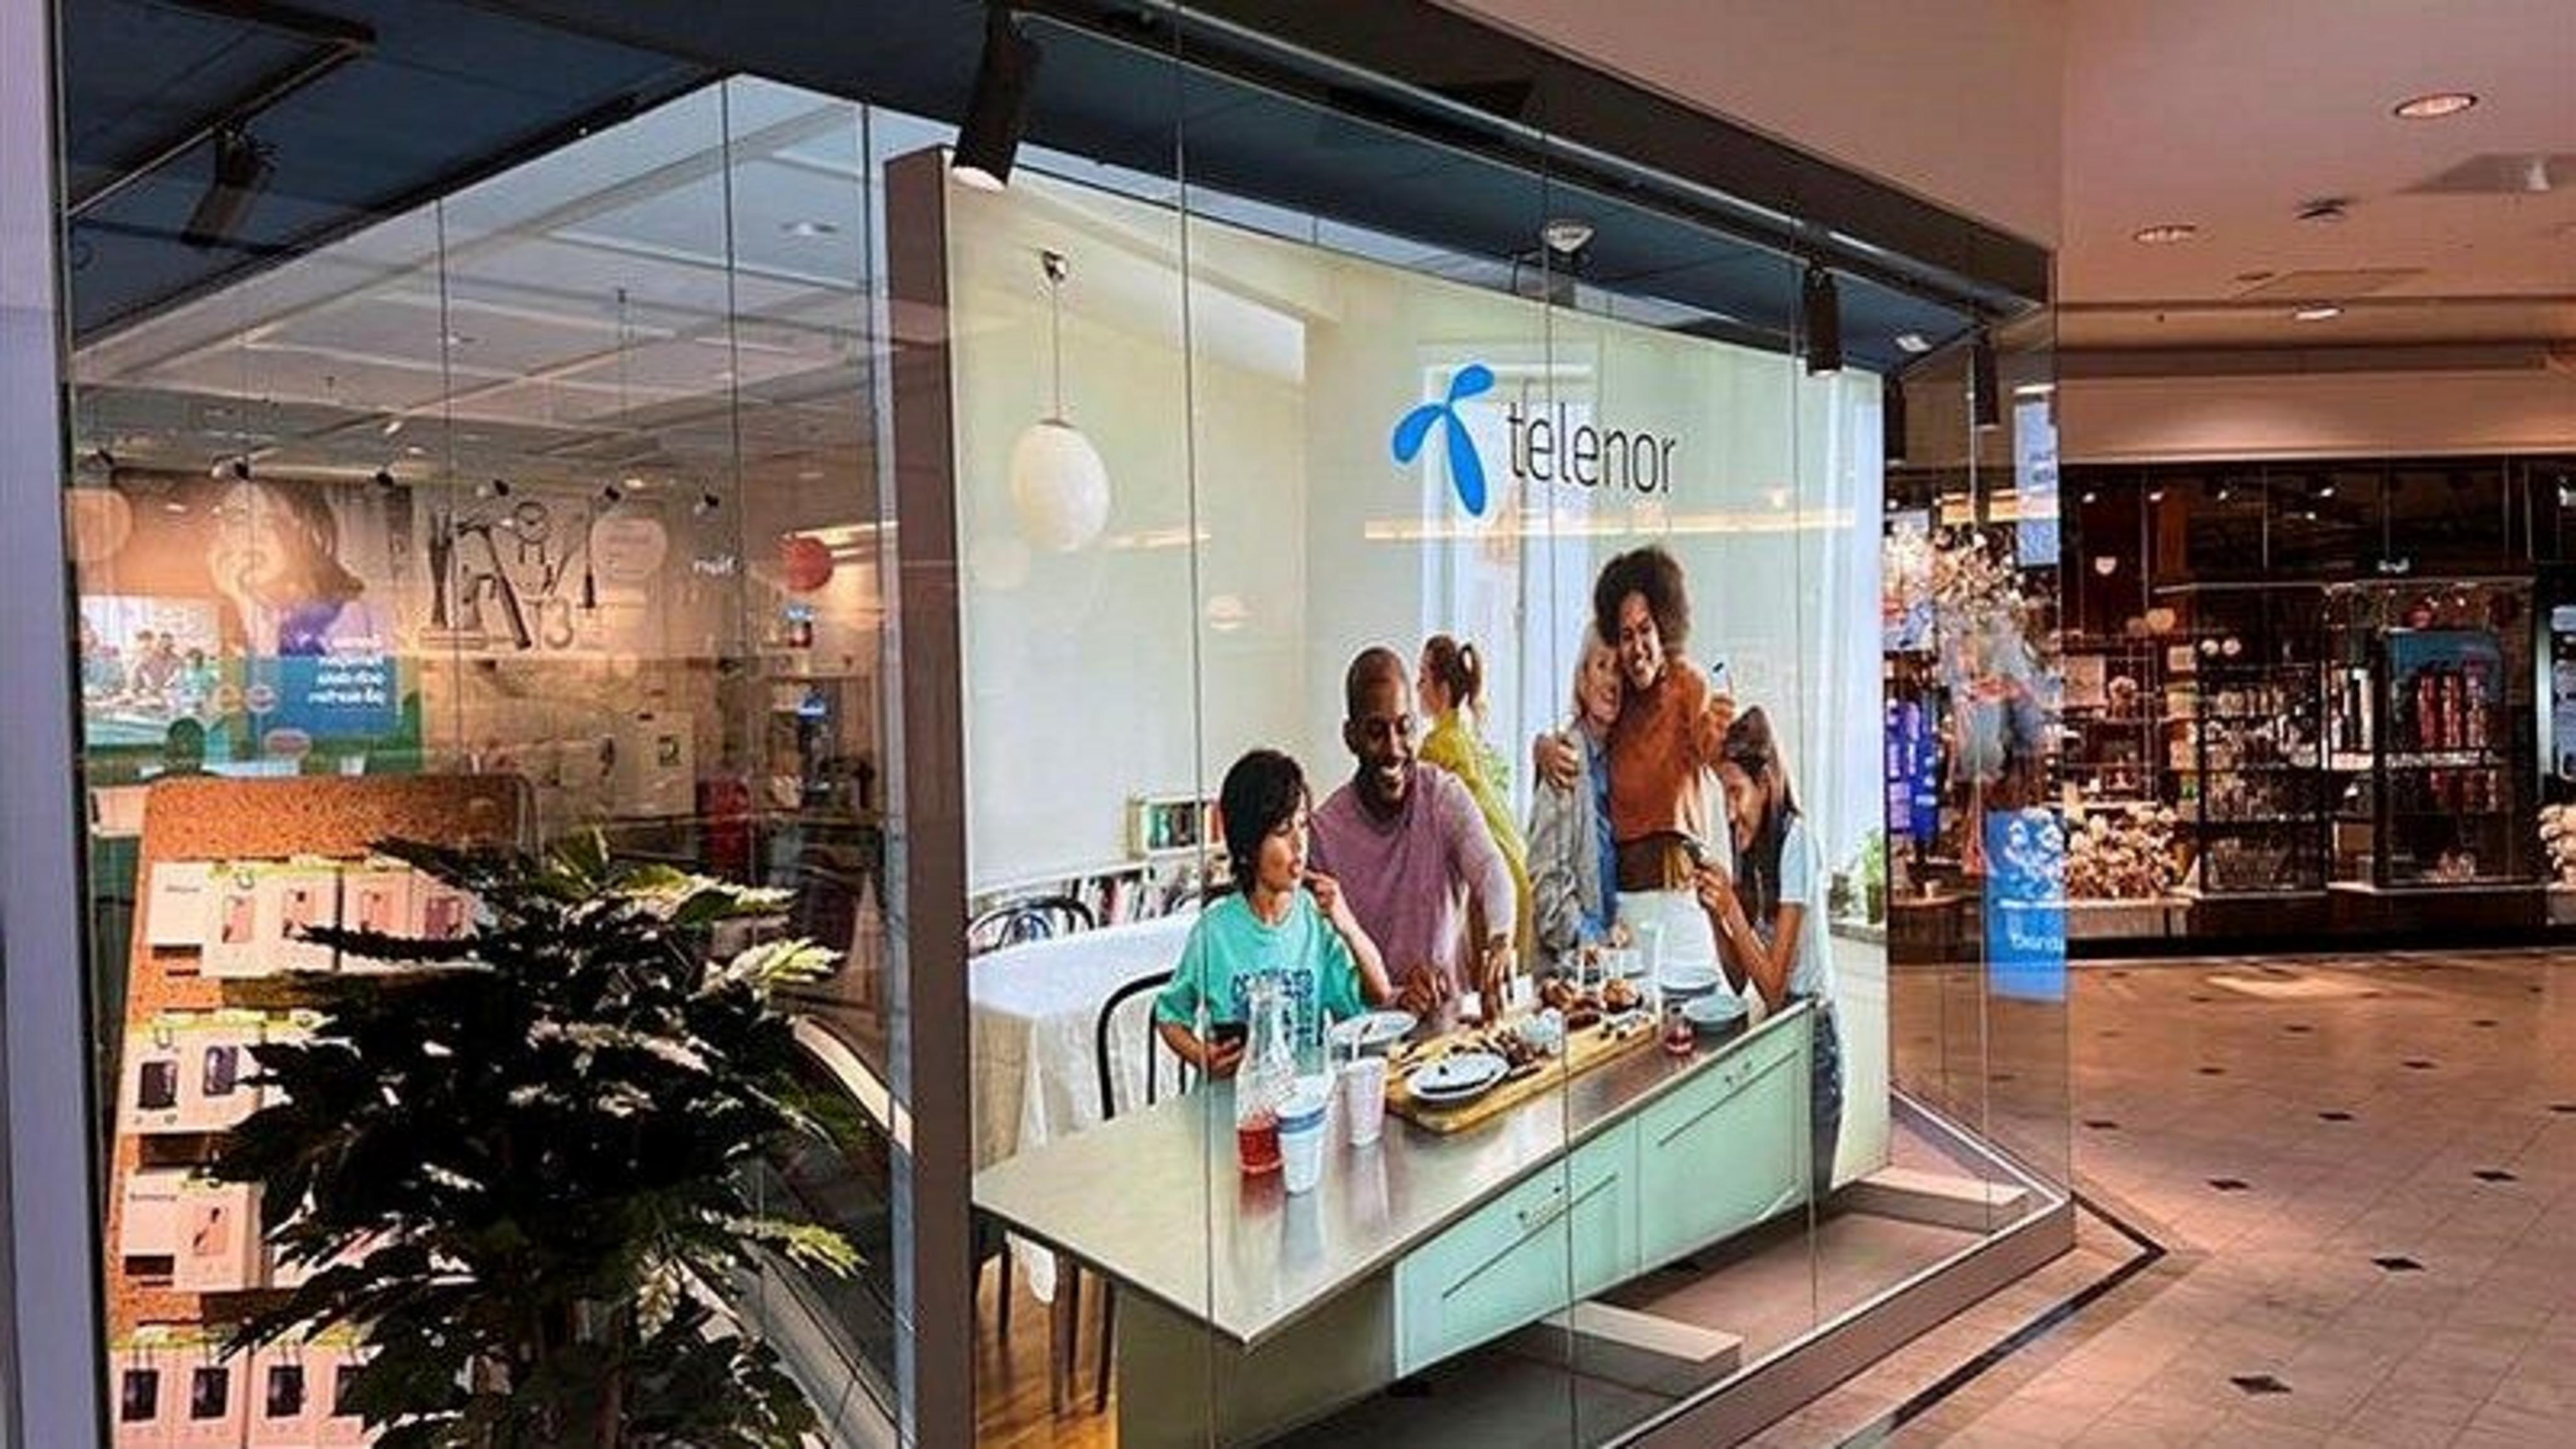 Telenor opens a new concept store in Skärholmen